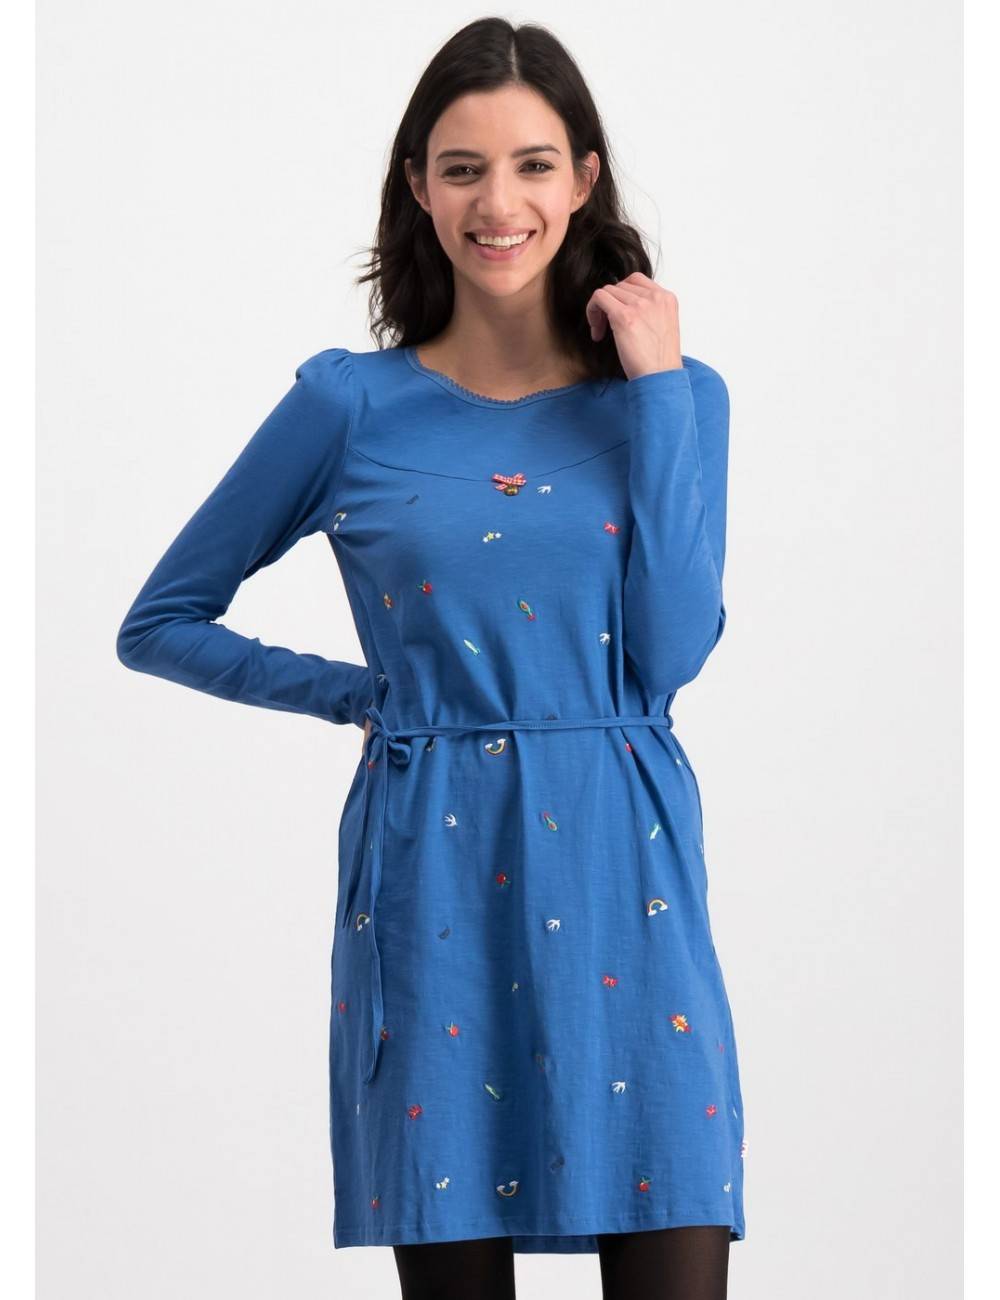 mrs spock dress